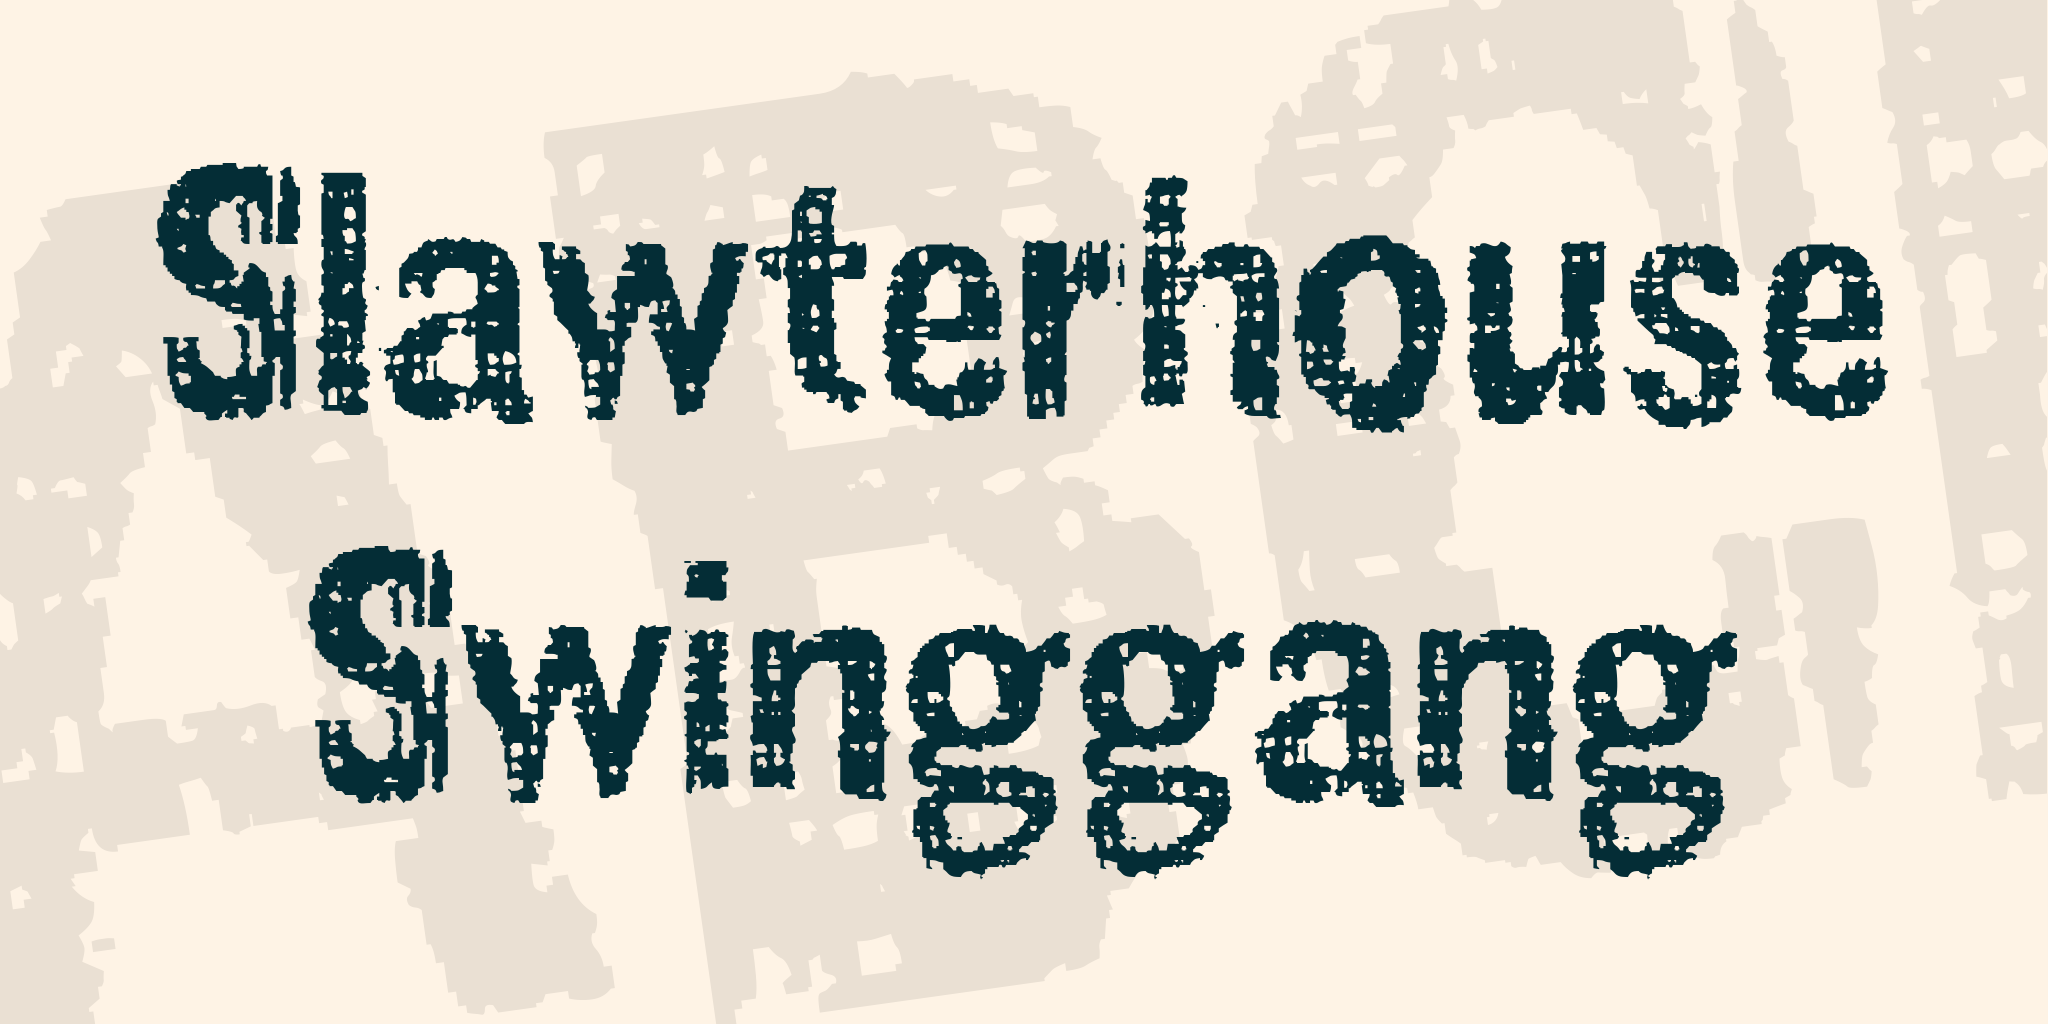 Slawterhouse Swinggang